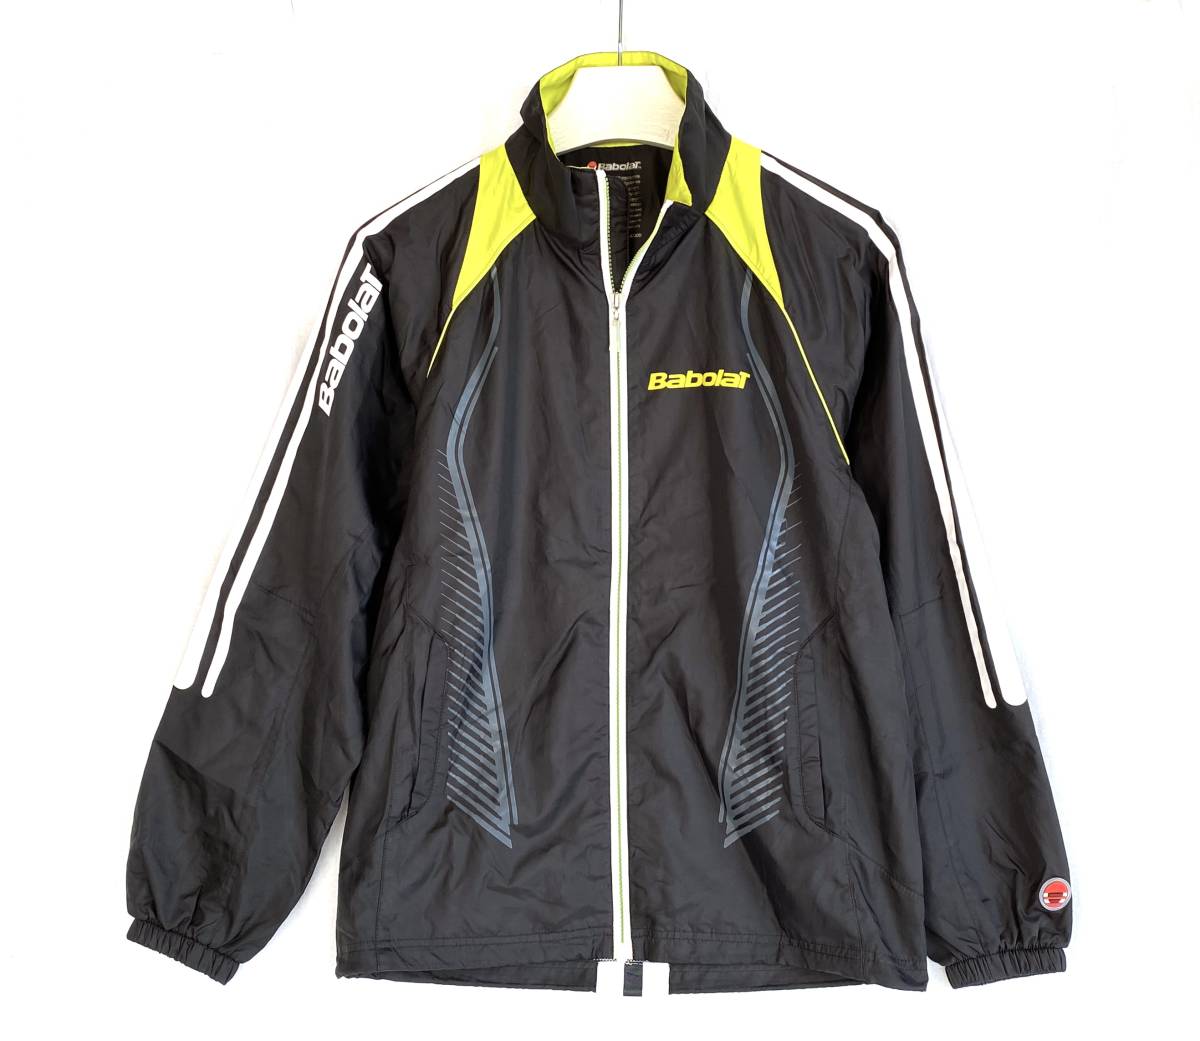  beautiful goods BabolaT Babolat nylon jacket men's S black neon sleeve Logo print full Zip high‐necked Descente tennis outer light weight D463